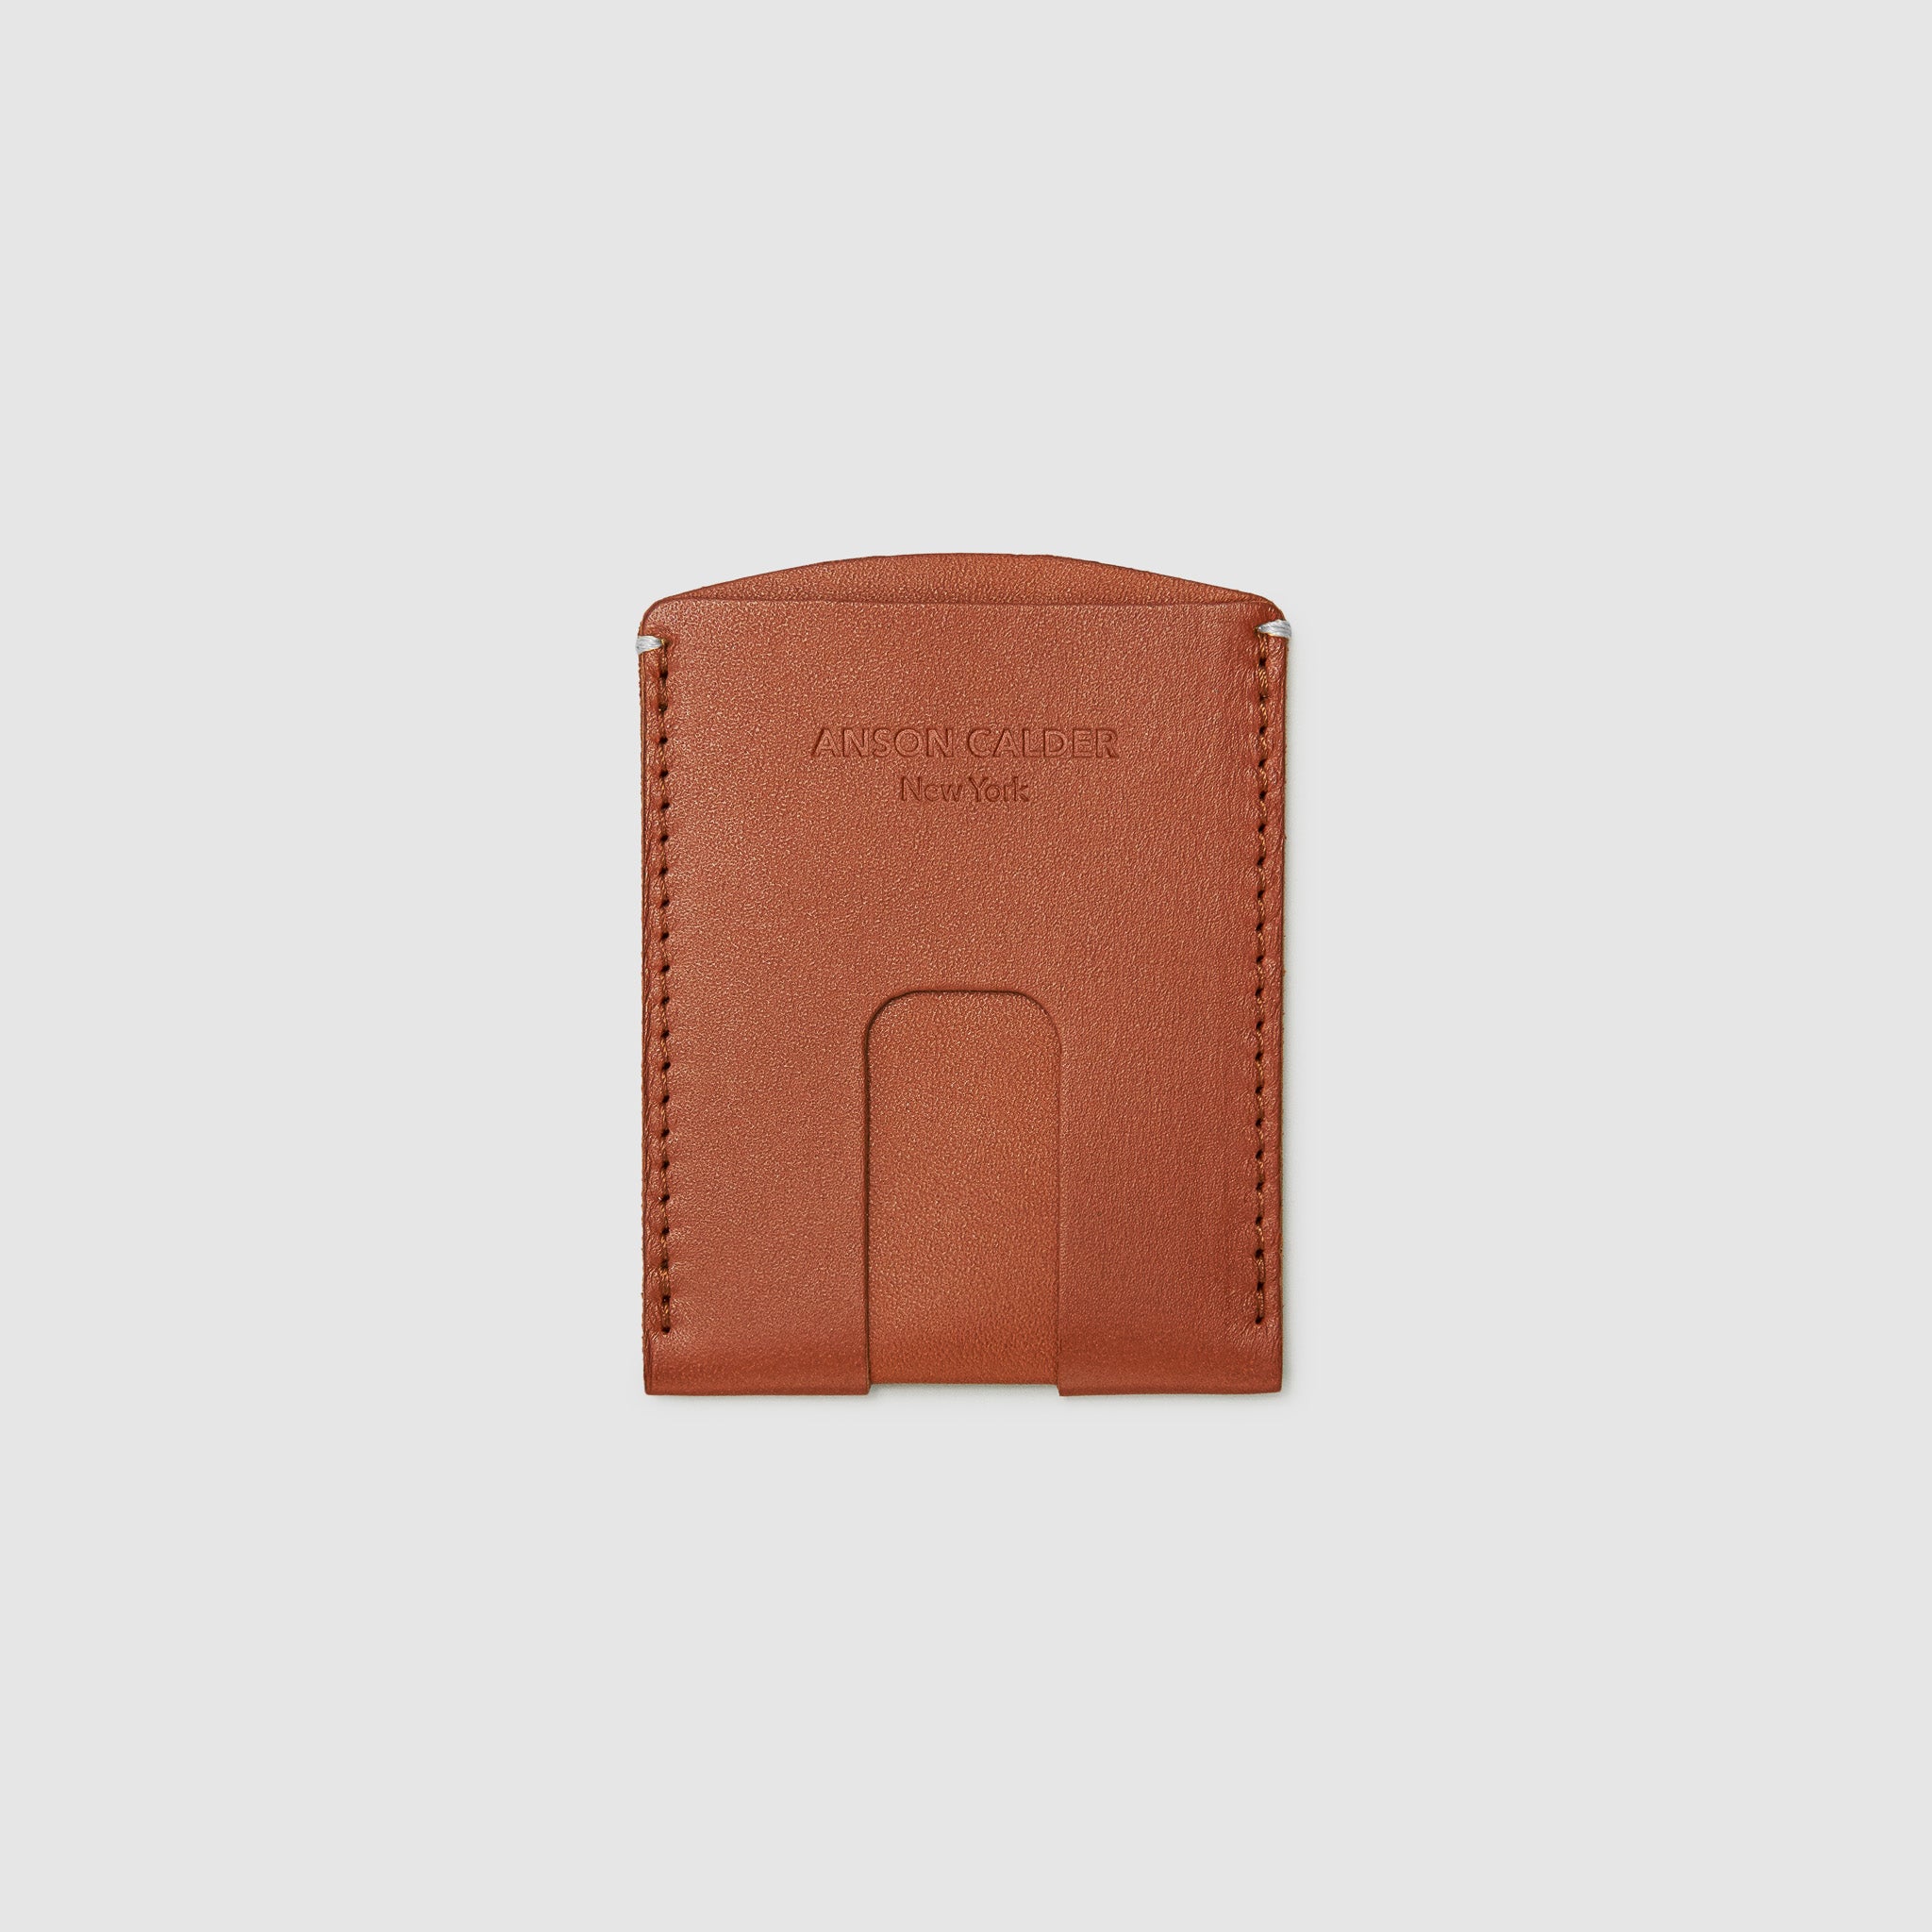 Anson Calder Card Holder Wallet french calfskin leather _cognac